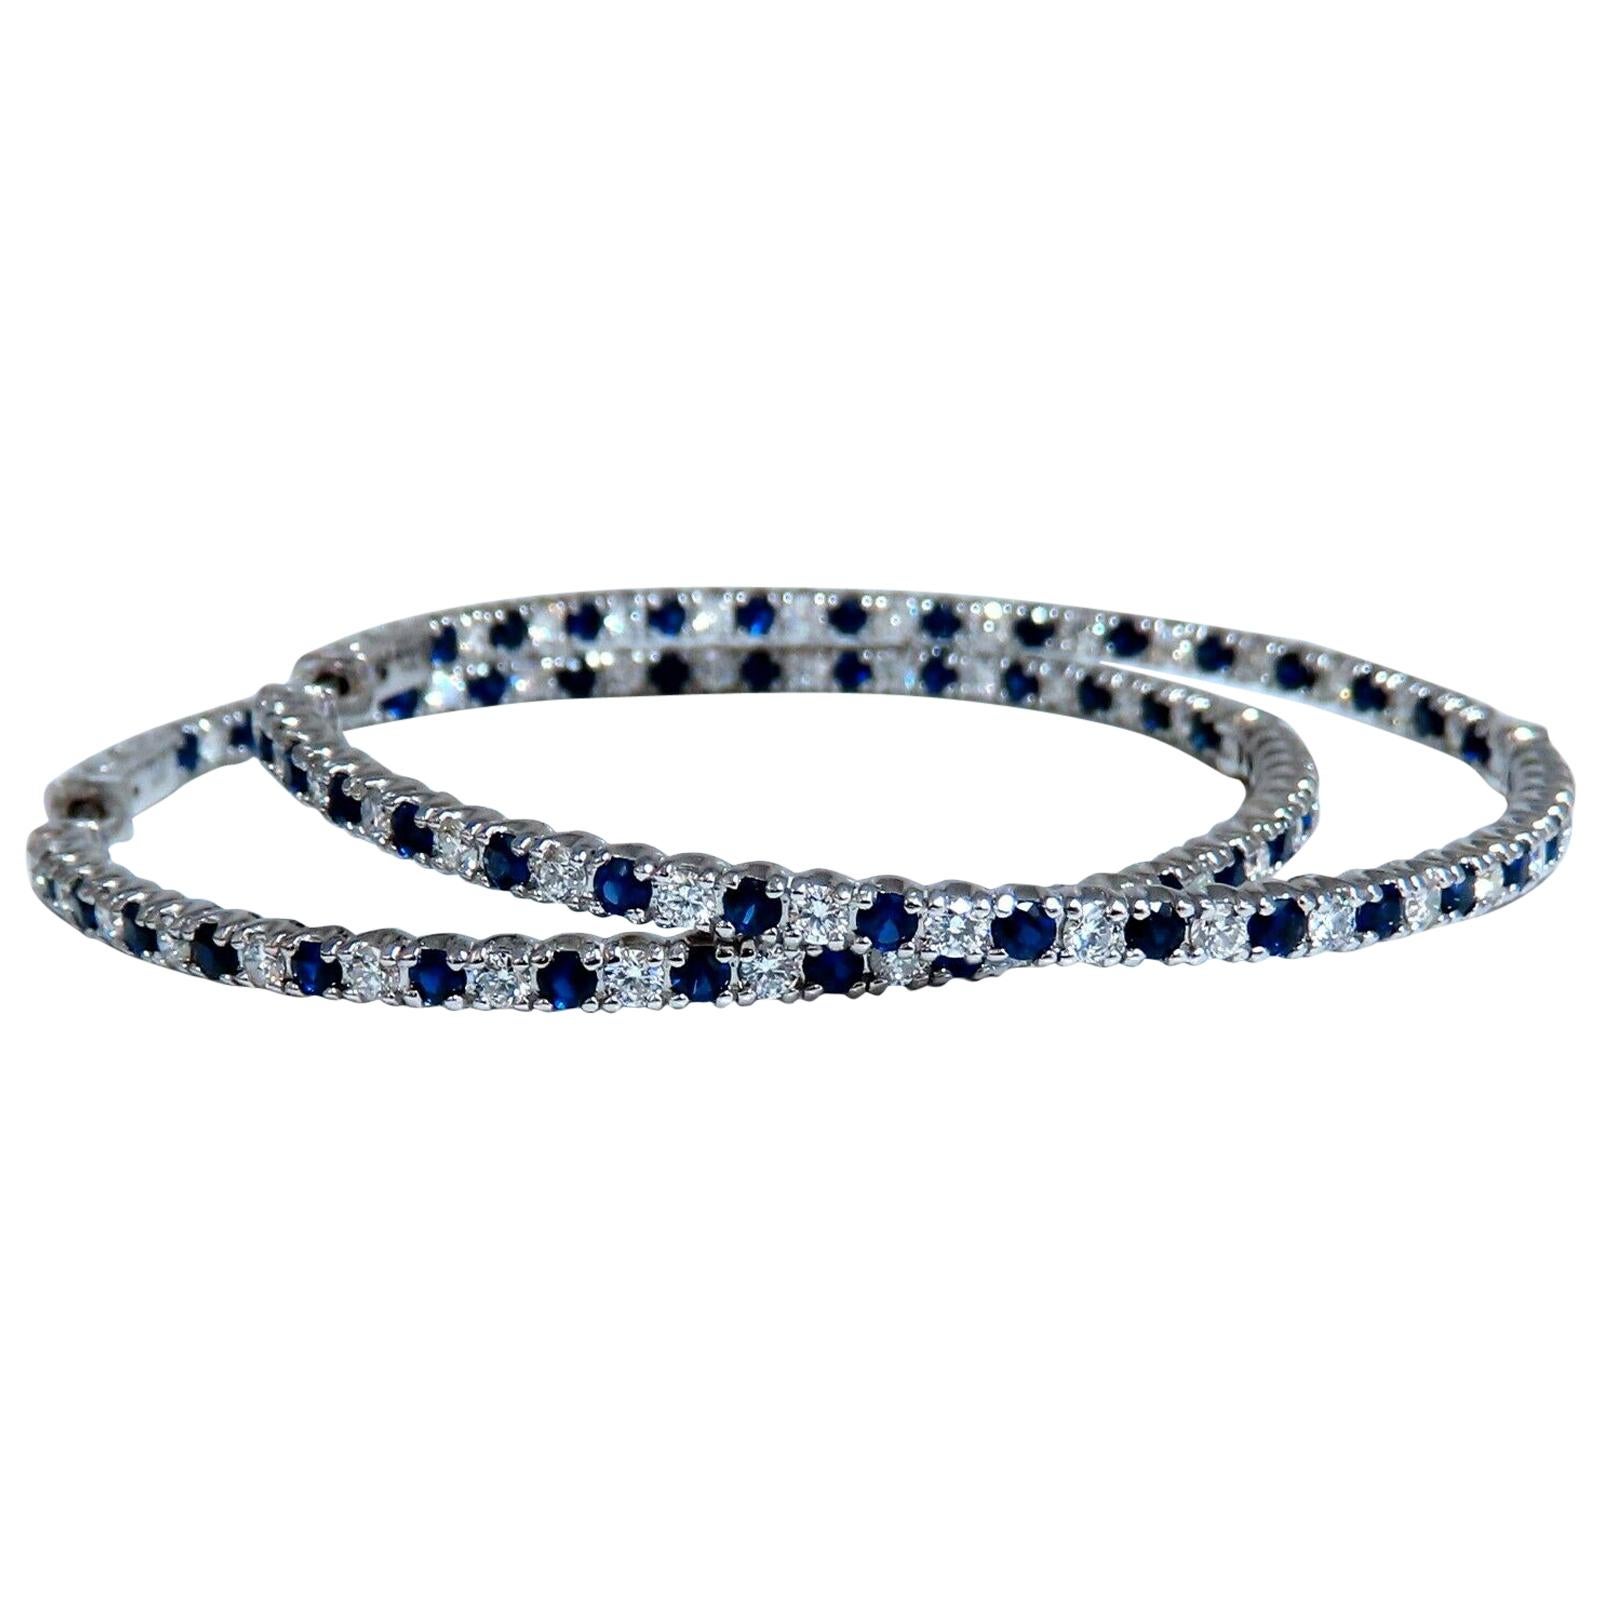 5.11 Carat Natural Sapphires Diamonds in Out Hoop Earrings 14 Karat For Sale